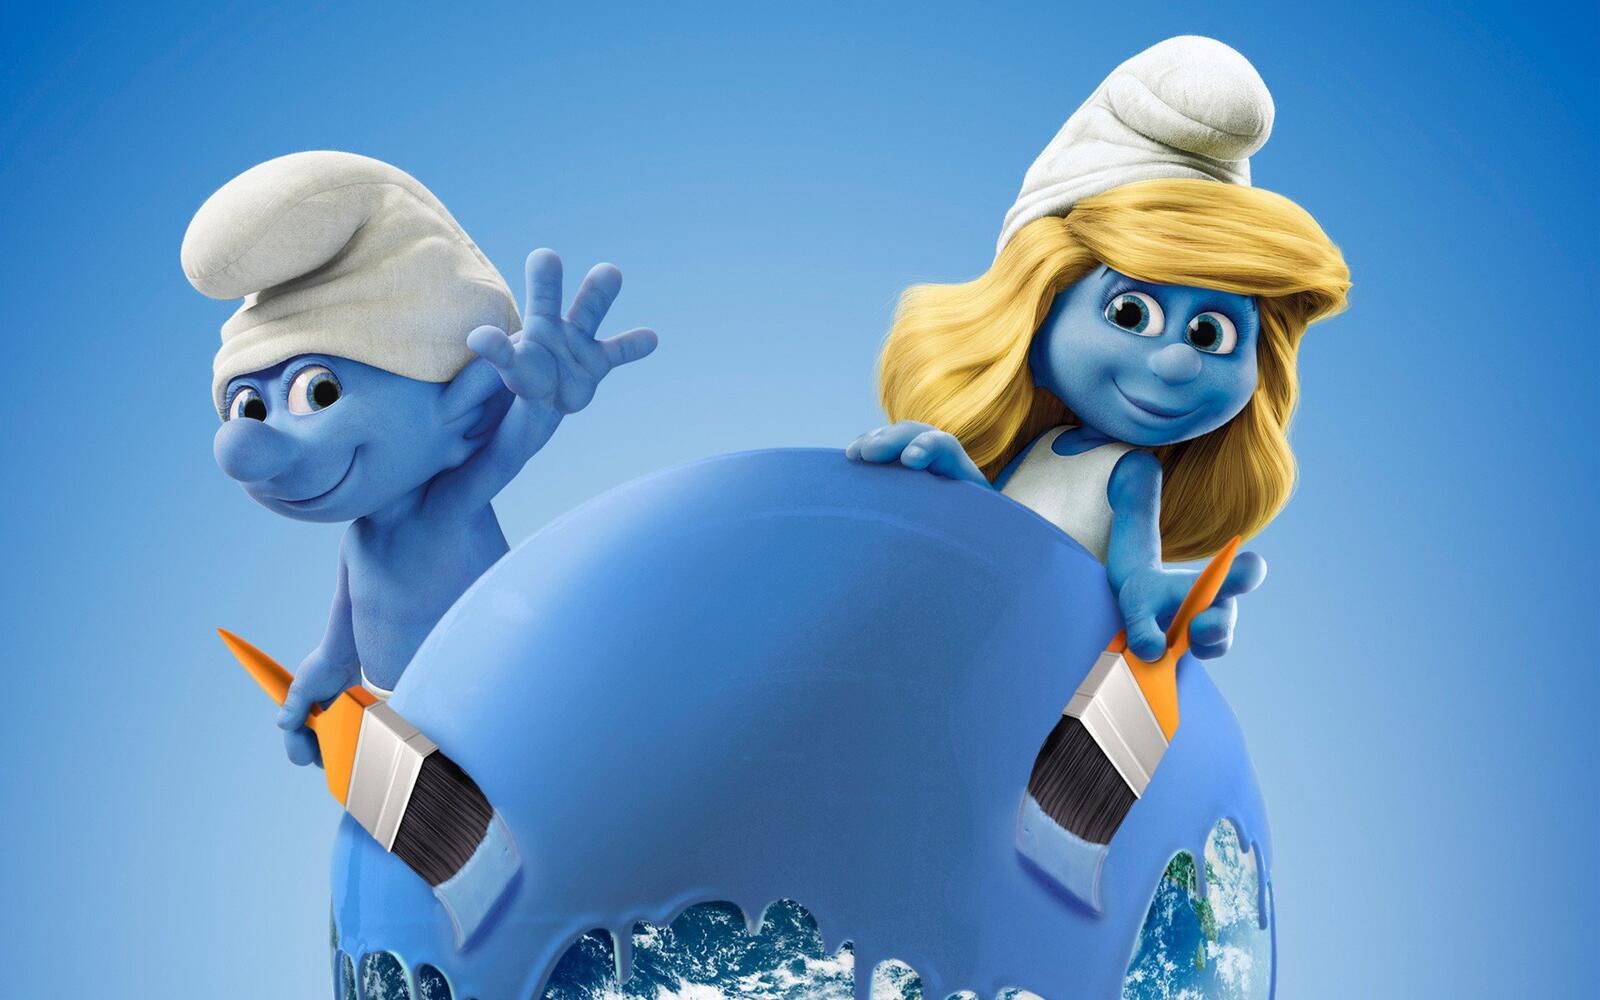 Wallpapers Smurfs animated movies 2017 Movies on the desktop